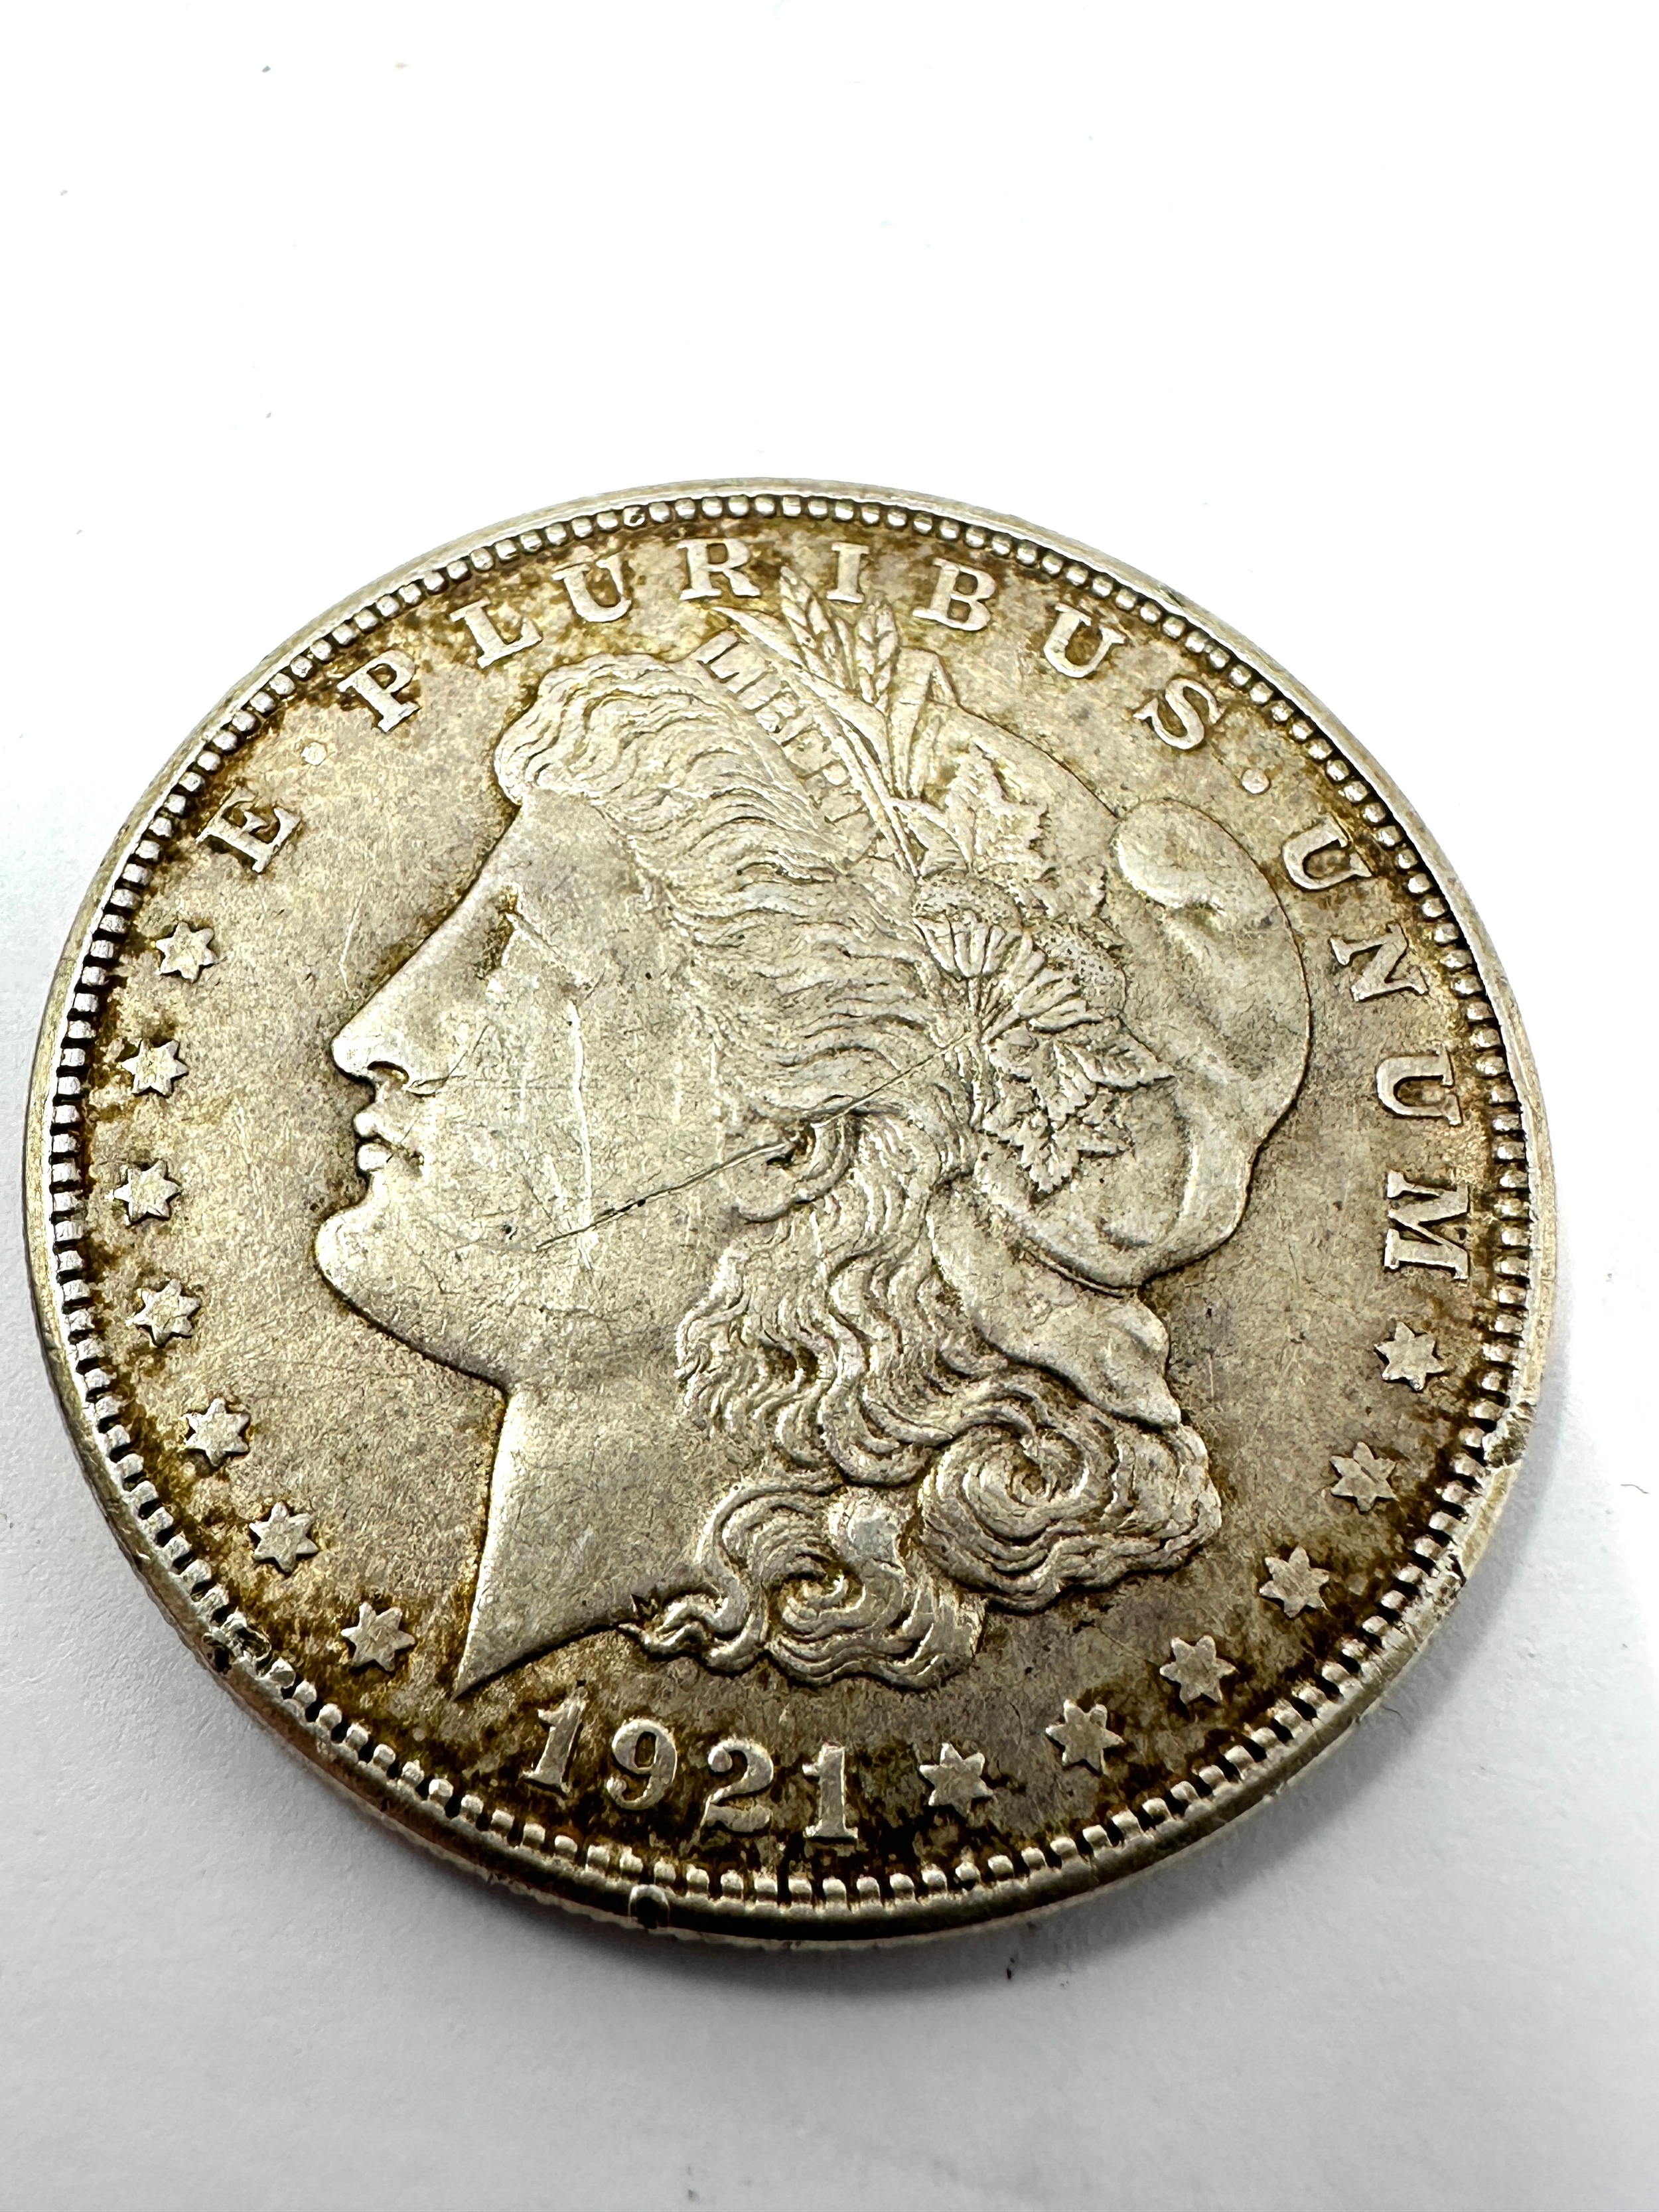 2 x silver morgan dollars 1921 & 1891 - Image 3 of 4